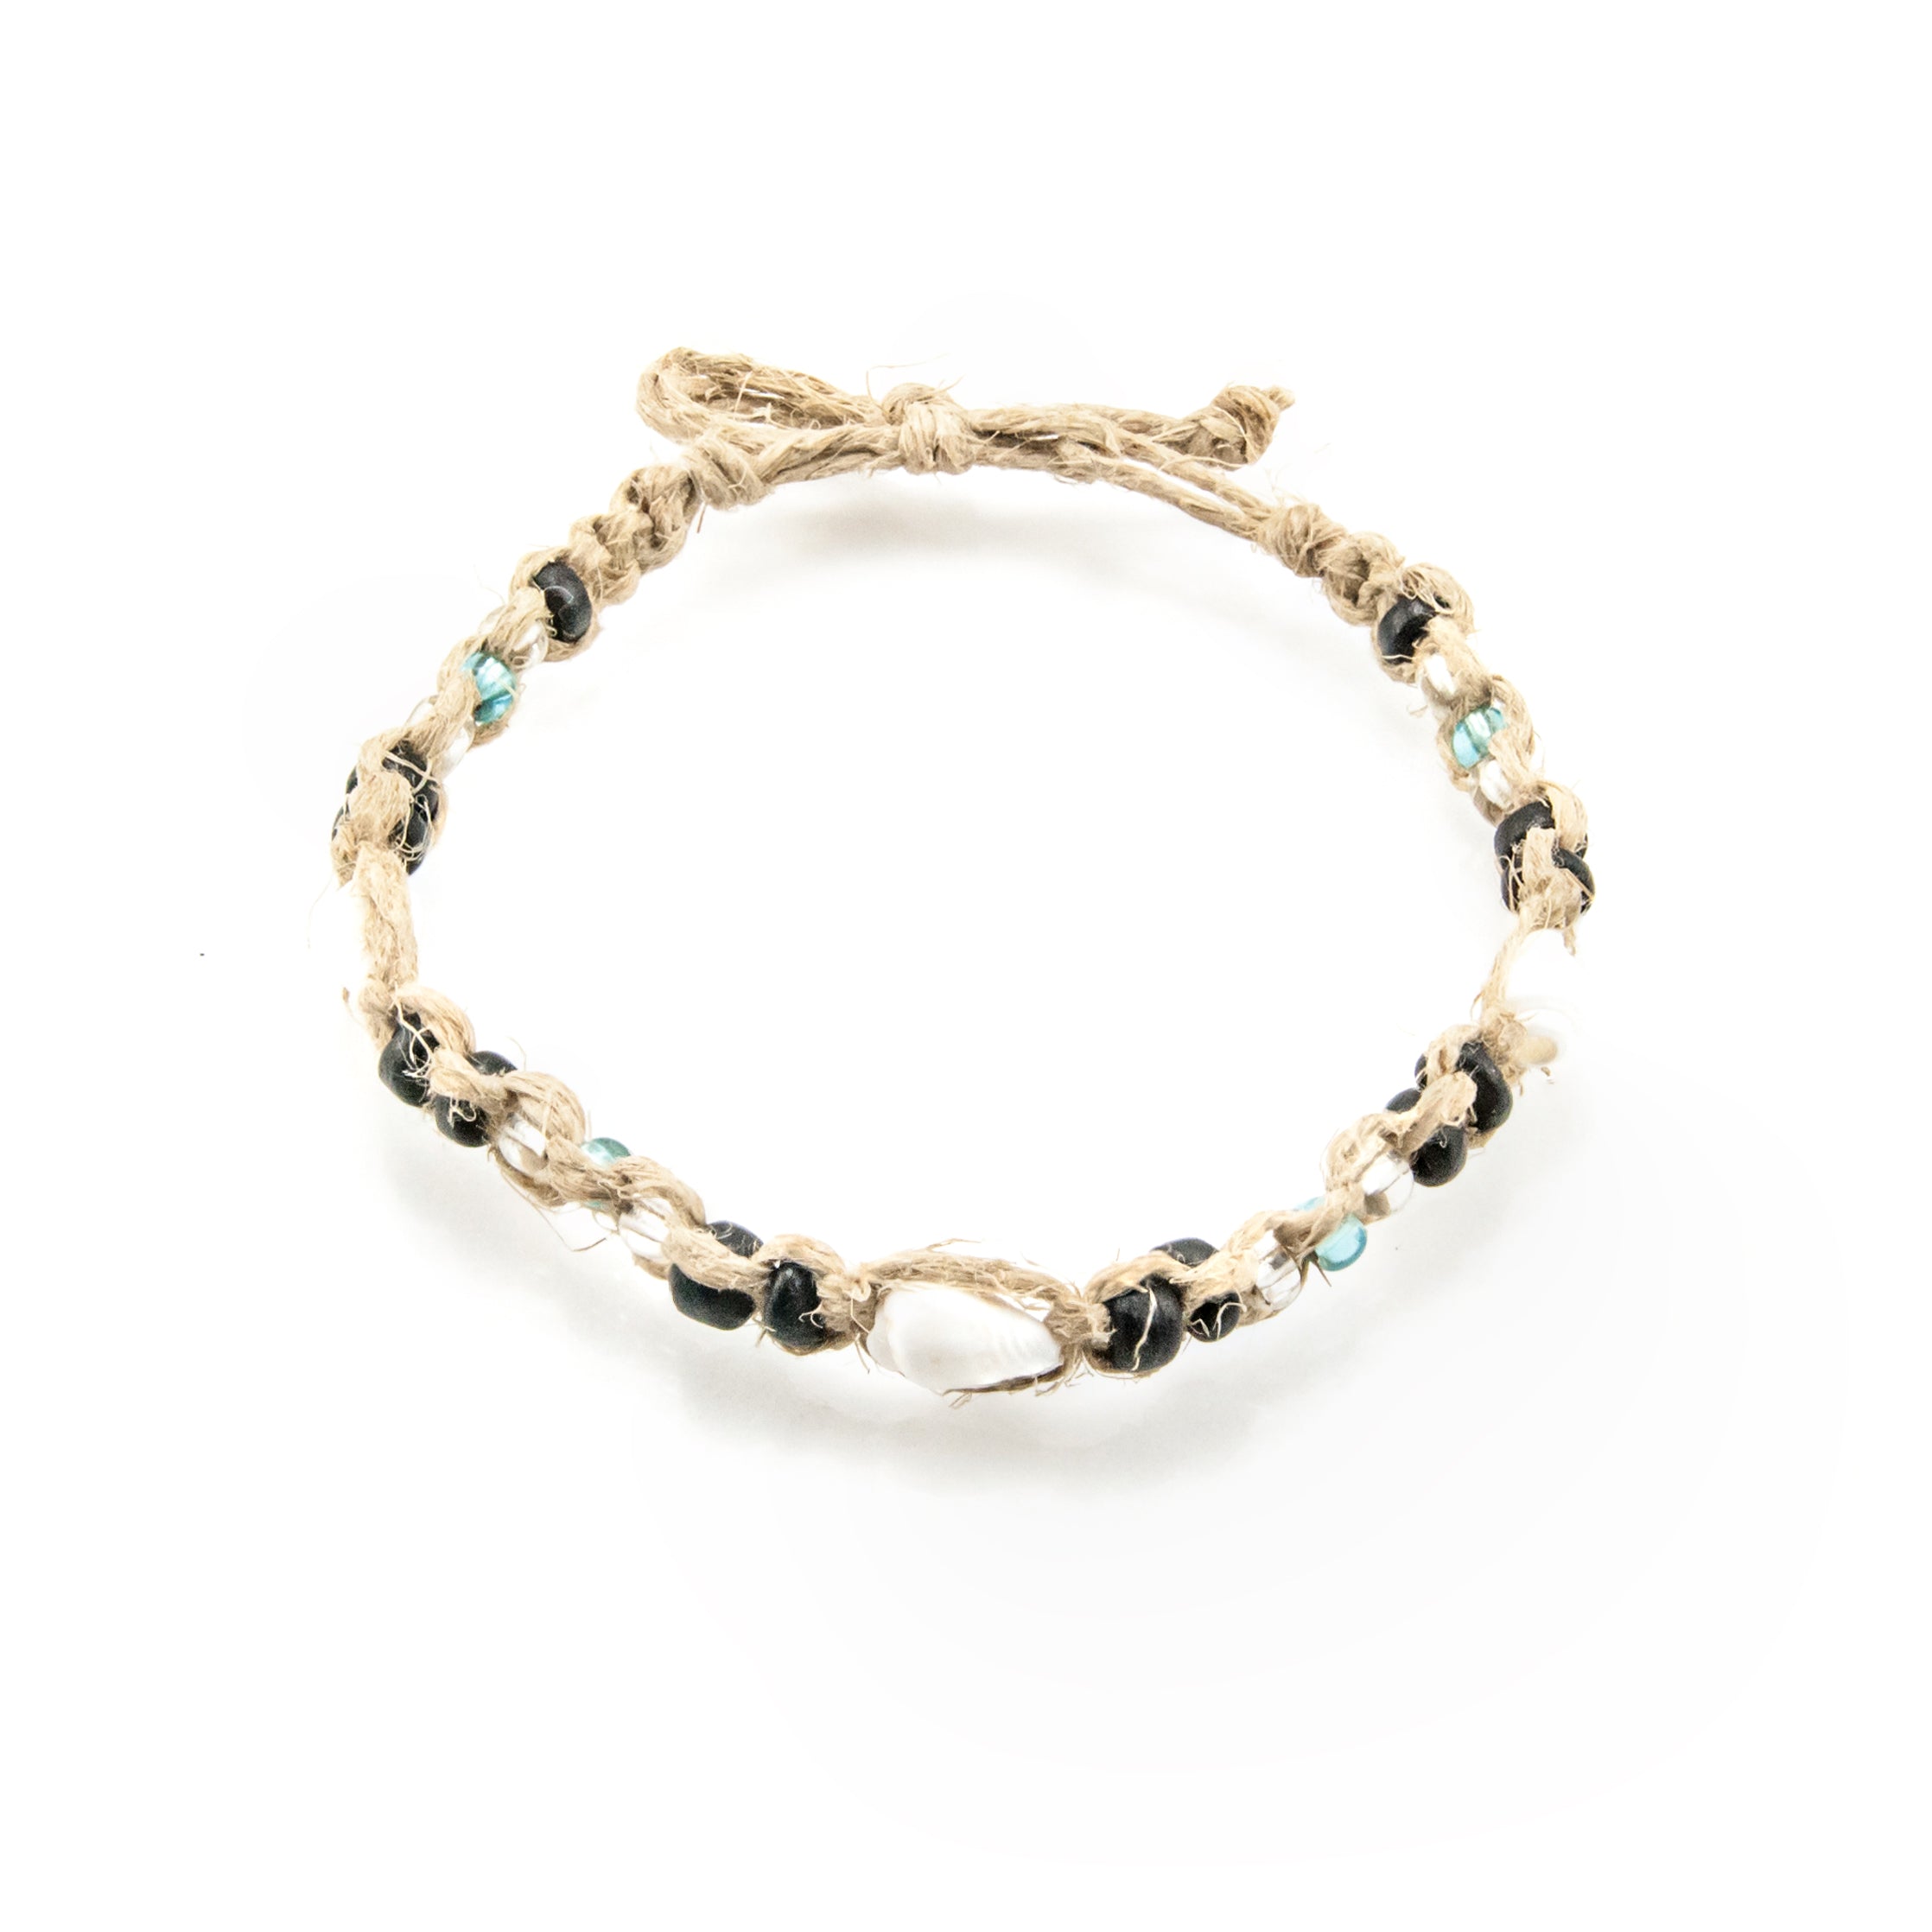 Nassa Shells, Black Coconut and Blue Beads on Hemp Anklet Bracelet